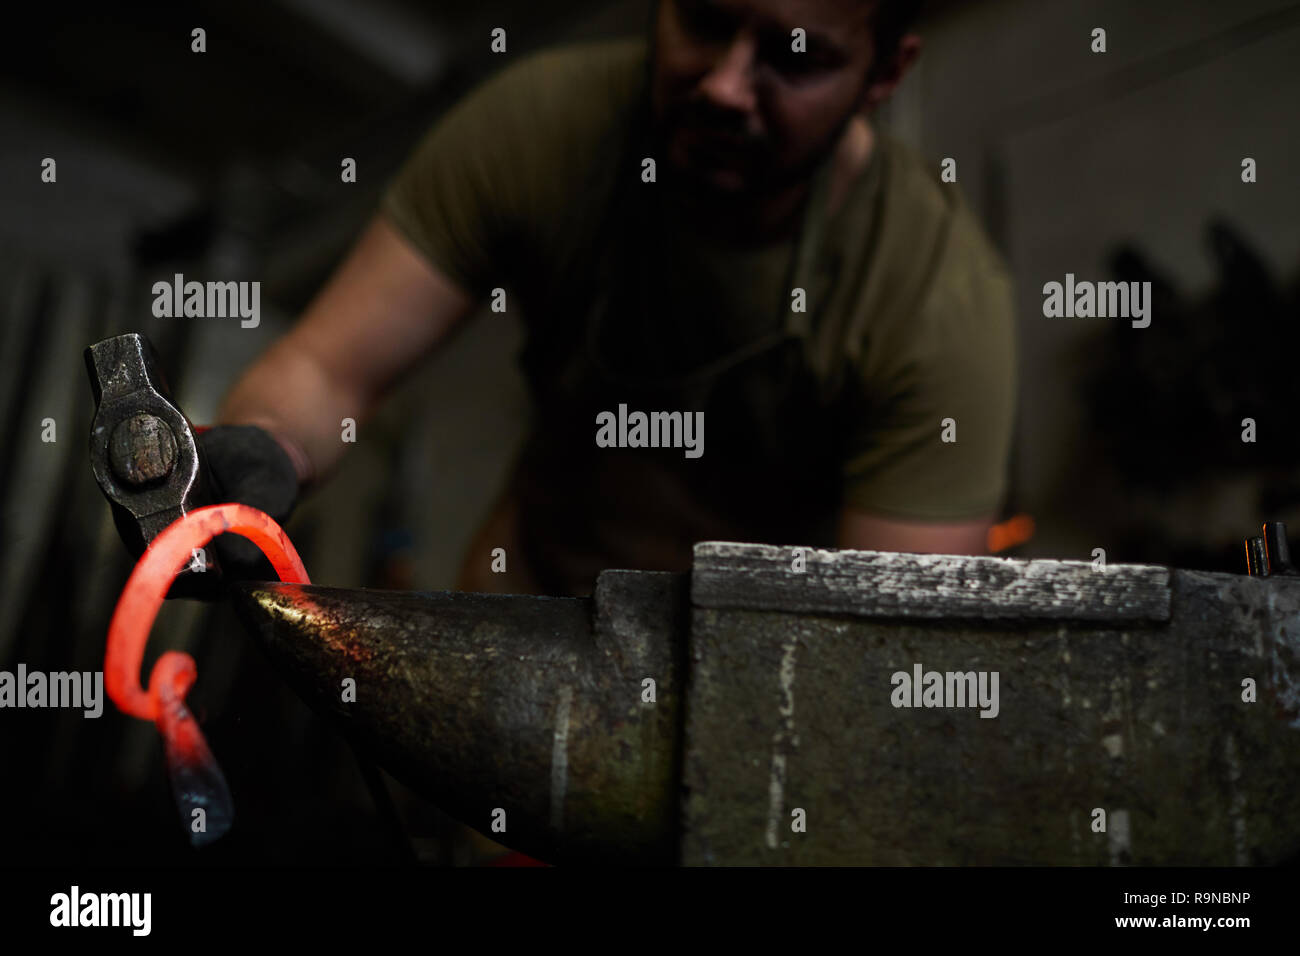 Forging metal in dark workshop Stock Photo